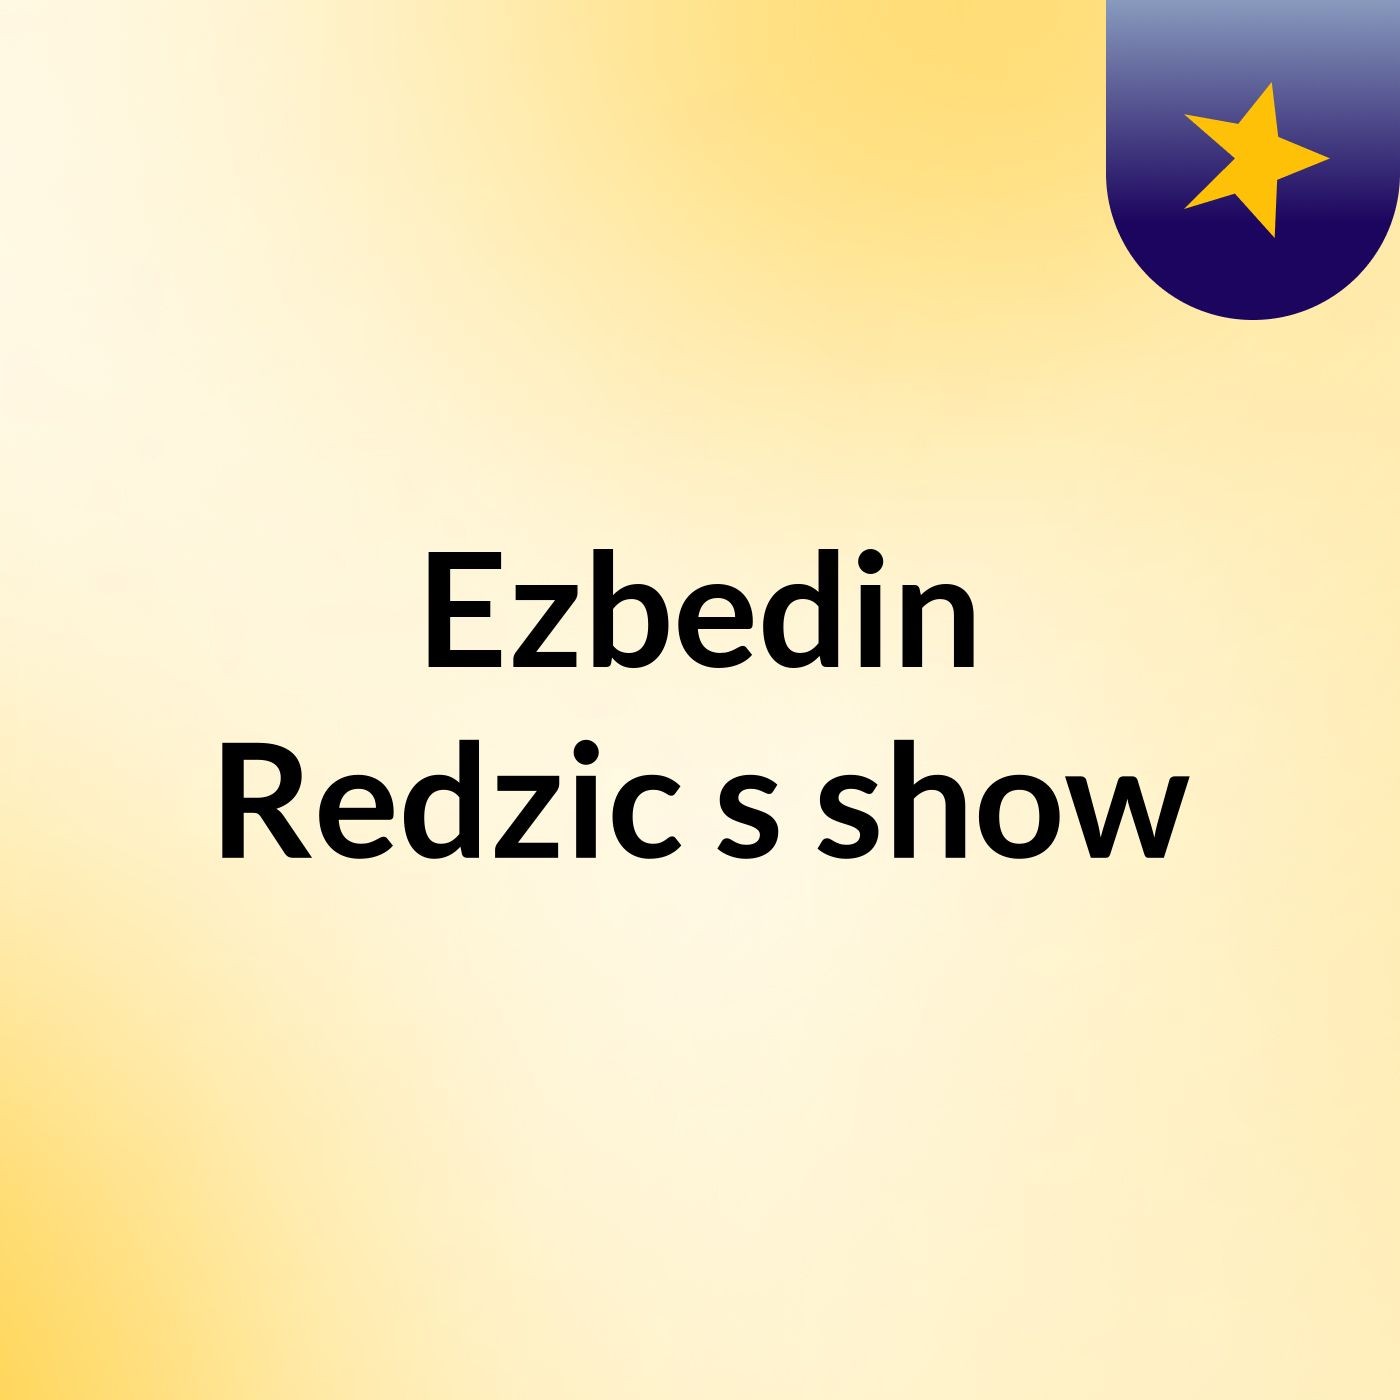 Ezbedin Redzic's show